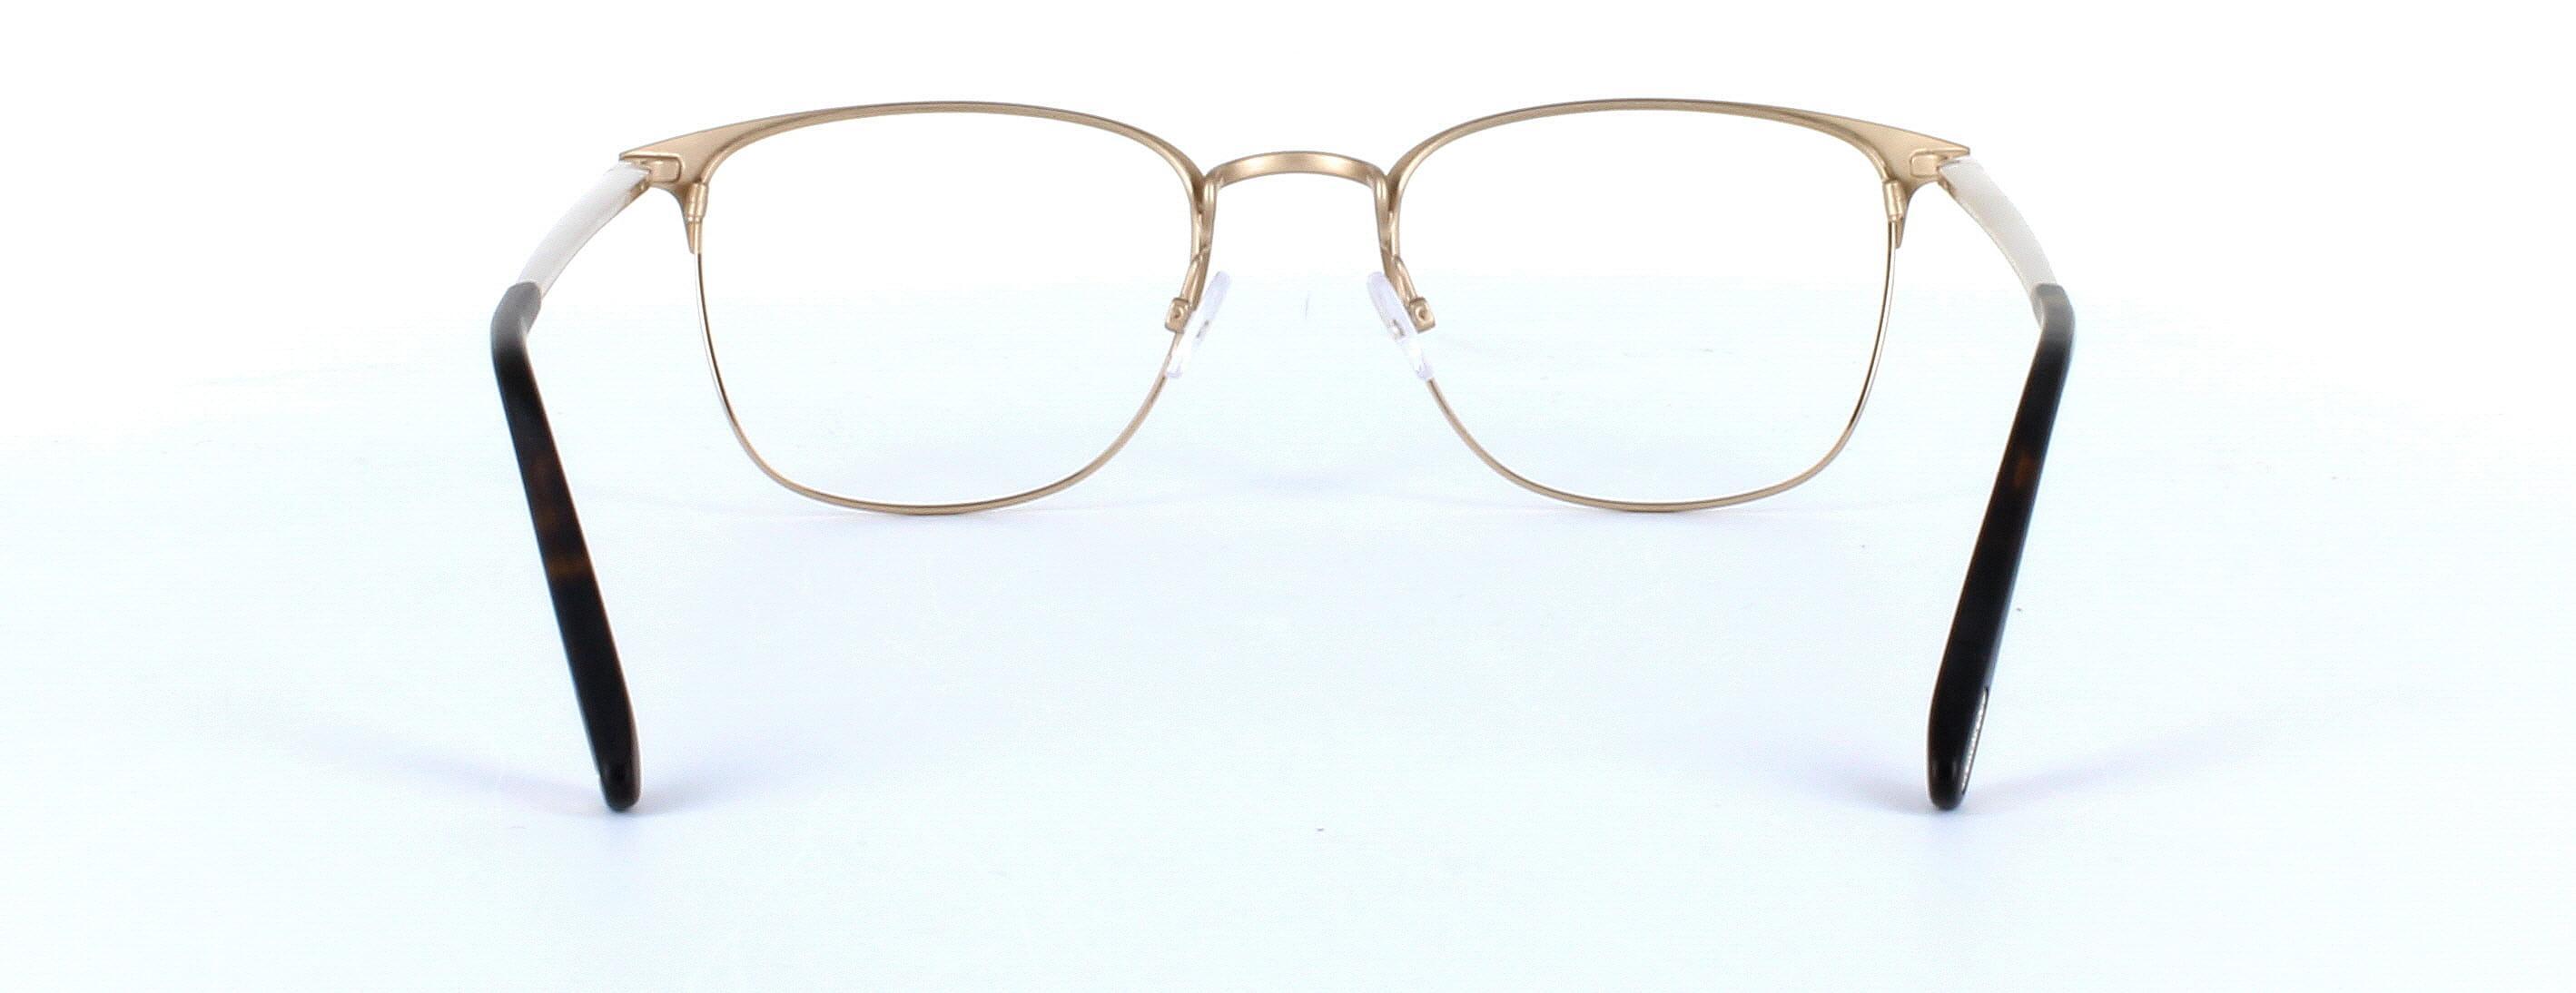 Ladies Tom Ford metal glasses - Matt gold - image 3